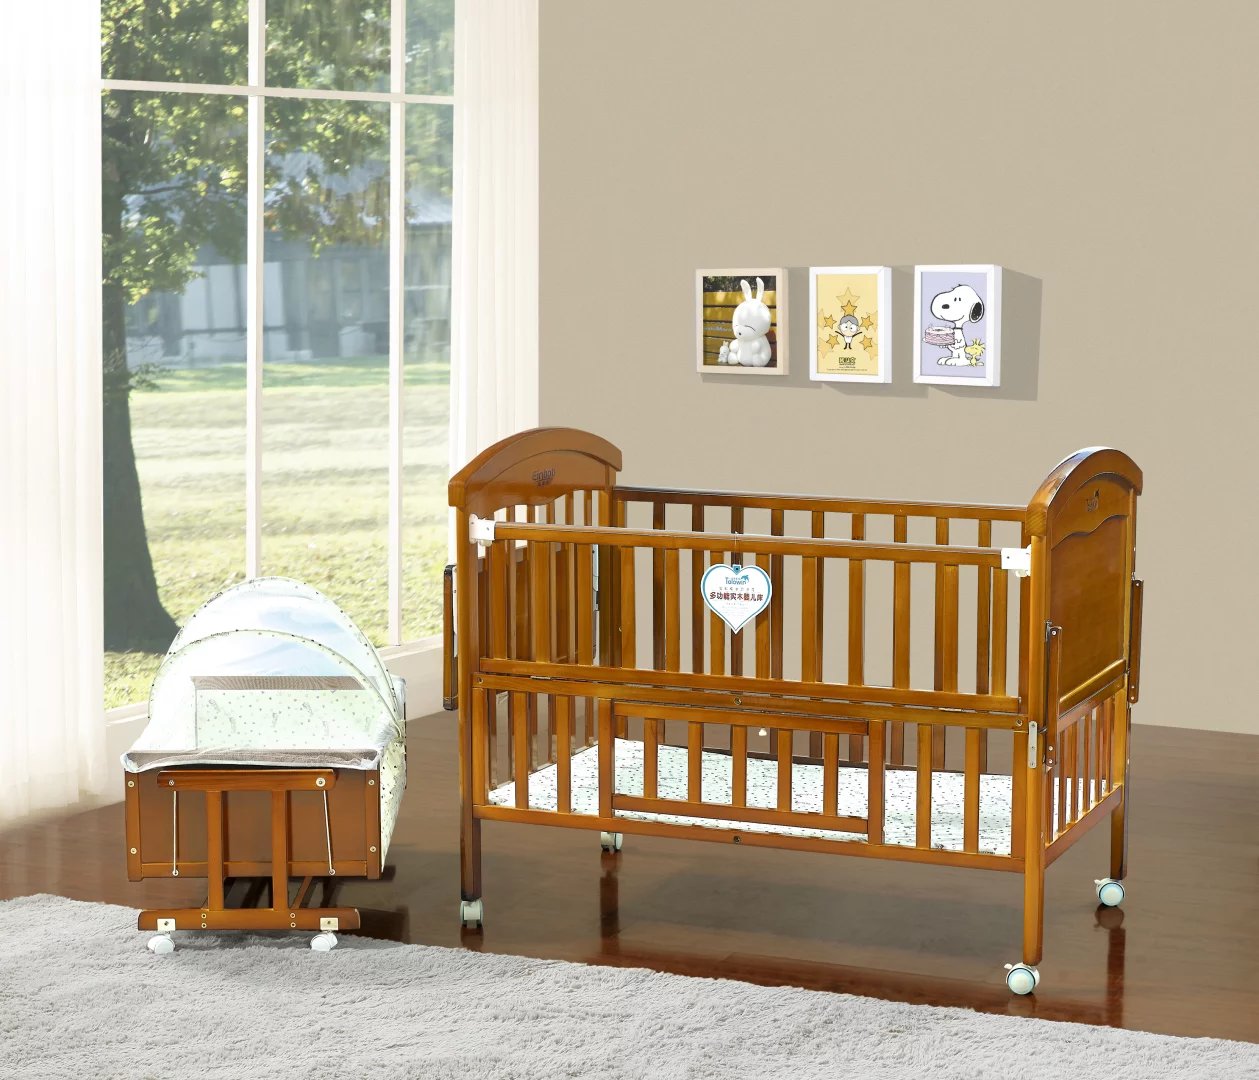 Samuelsdirect Baby Cot Bed Baby Crib 181 1